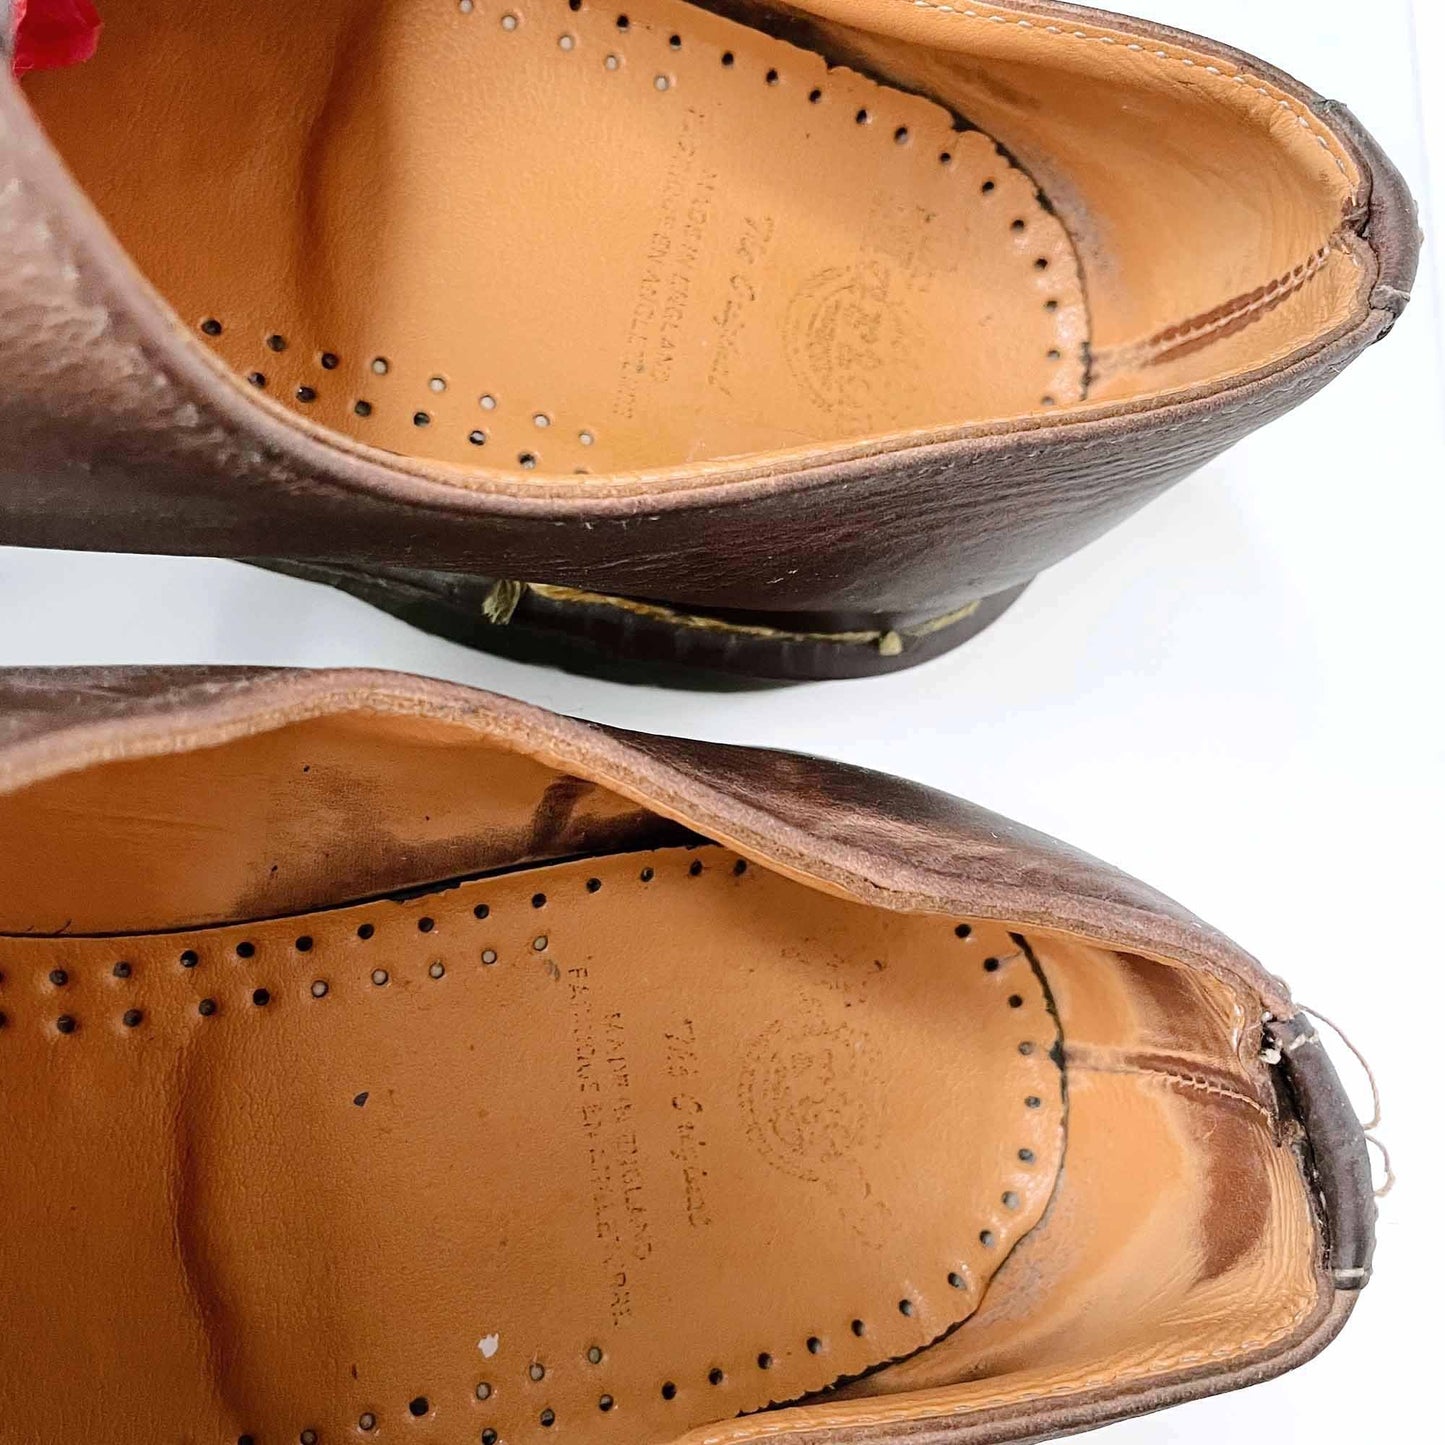 vintage 90's women's doc martens leather oxford shoes - size 10